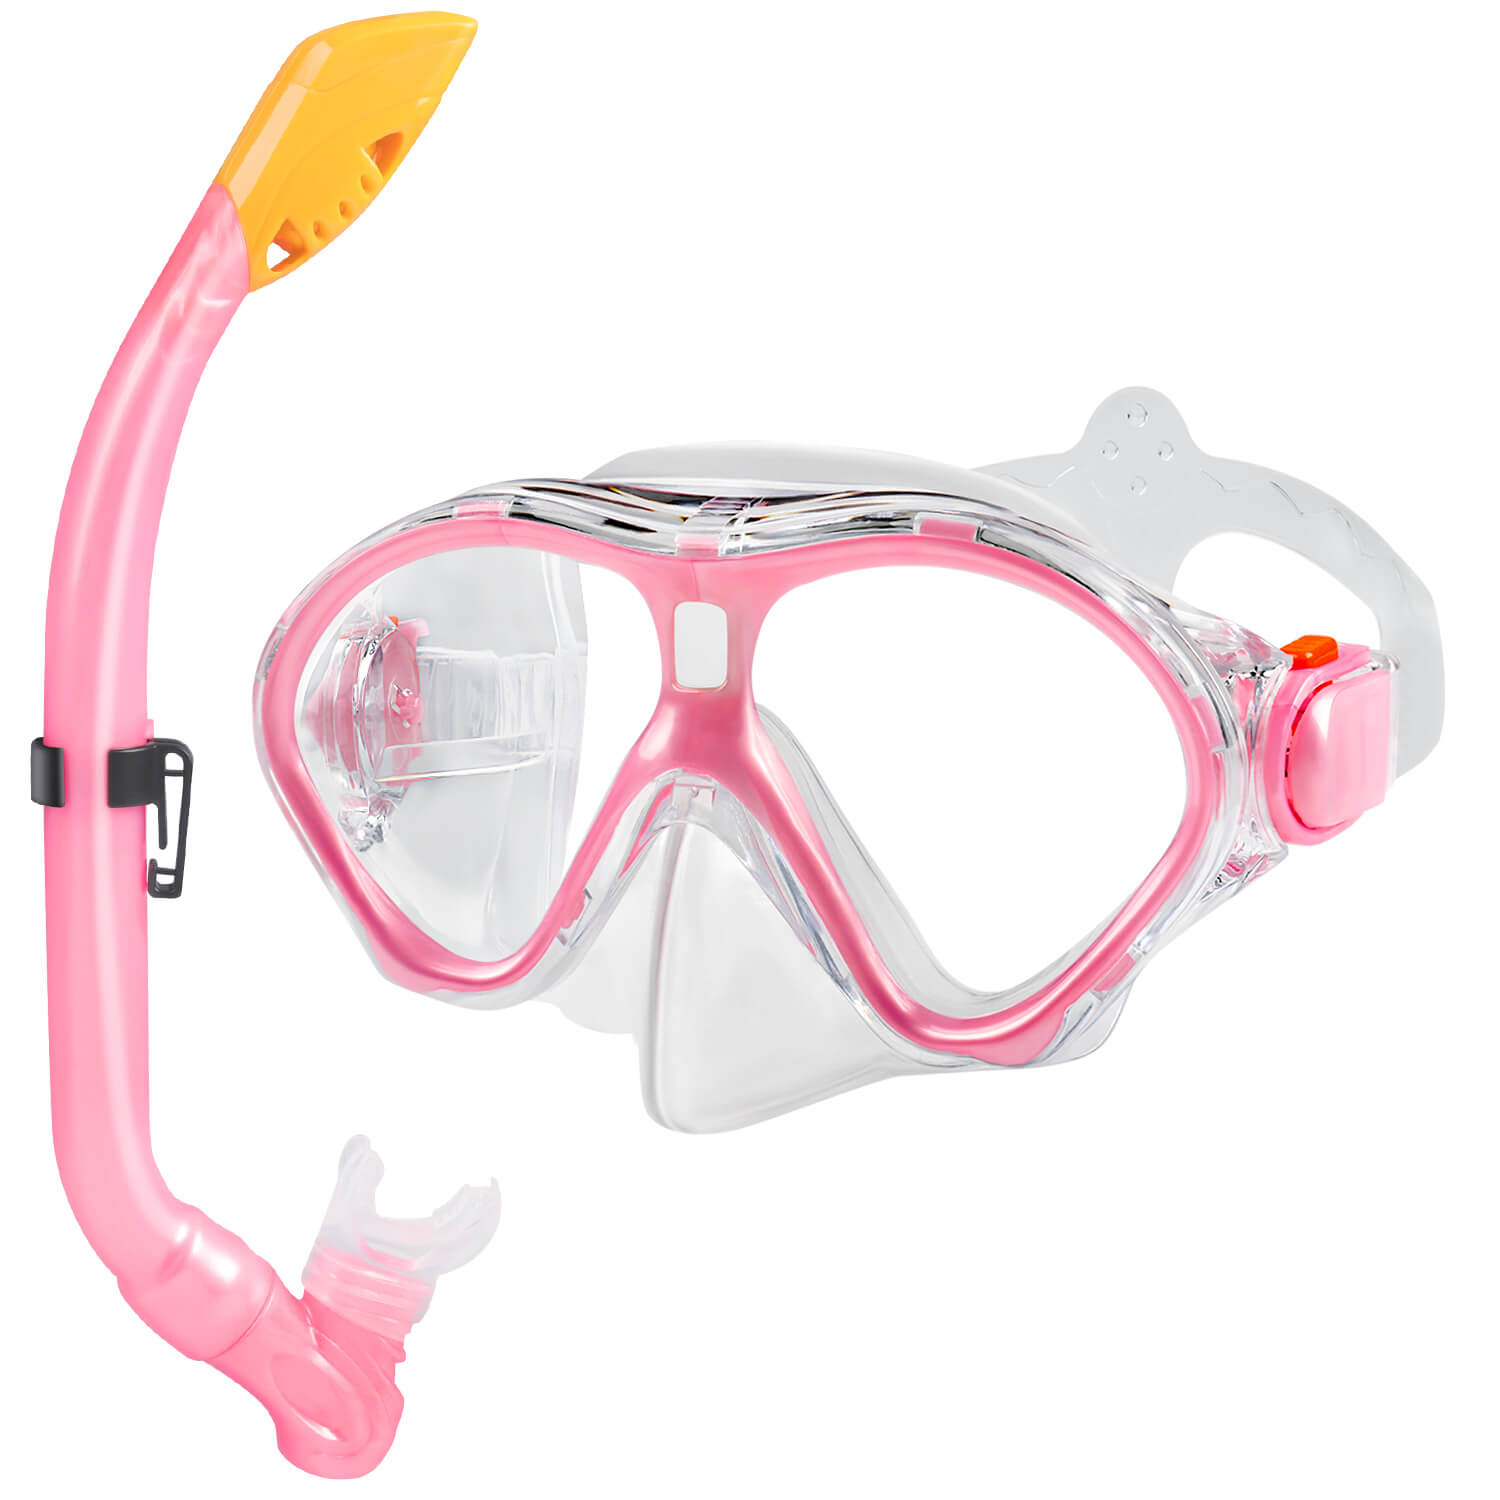 Best Kid's Snorkel Mask: Gintenco Kids Snorkel Set Pink